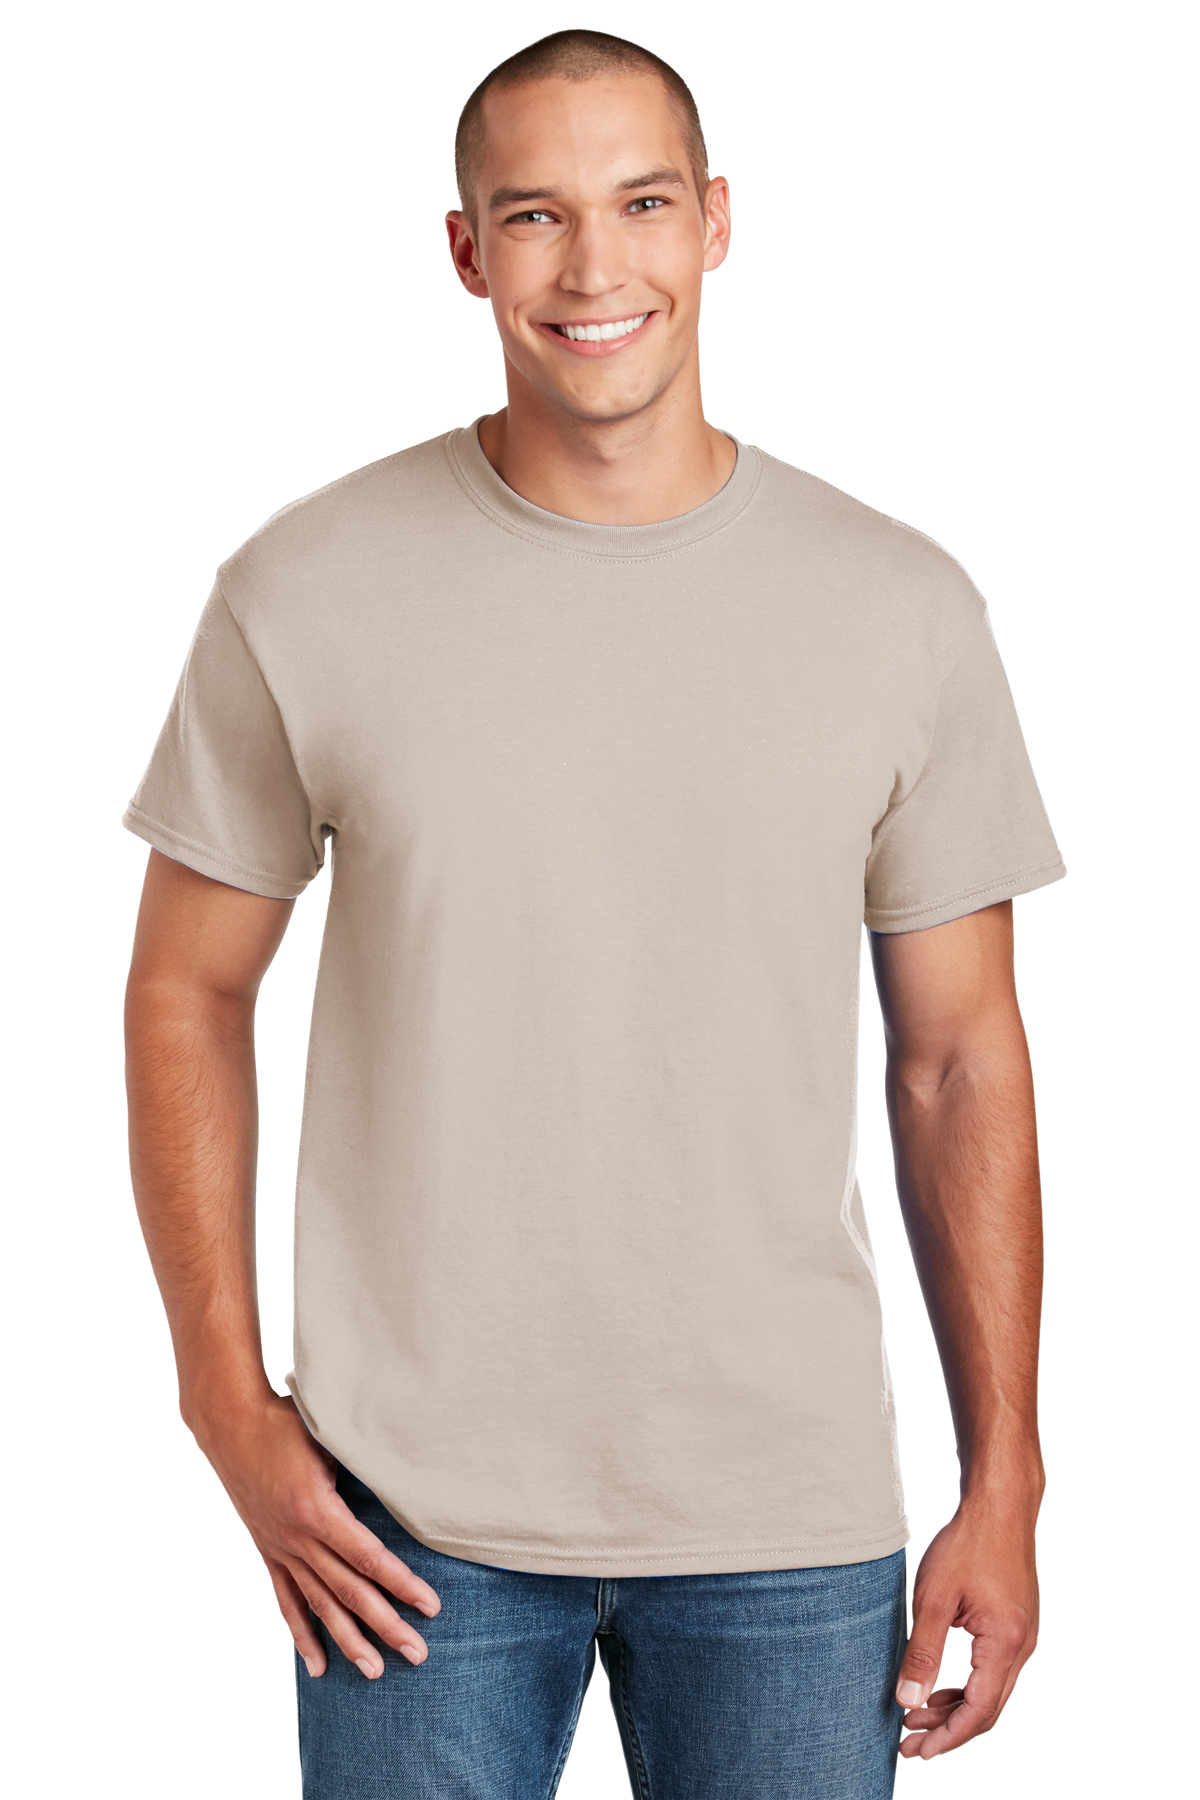 Gildan G8000 50% Cotton 50% Polyester DryBlend T-Shirt Sand Large 3 Pack 